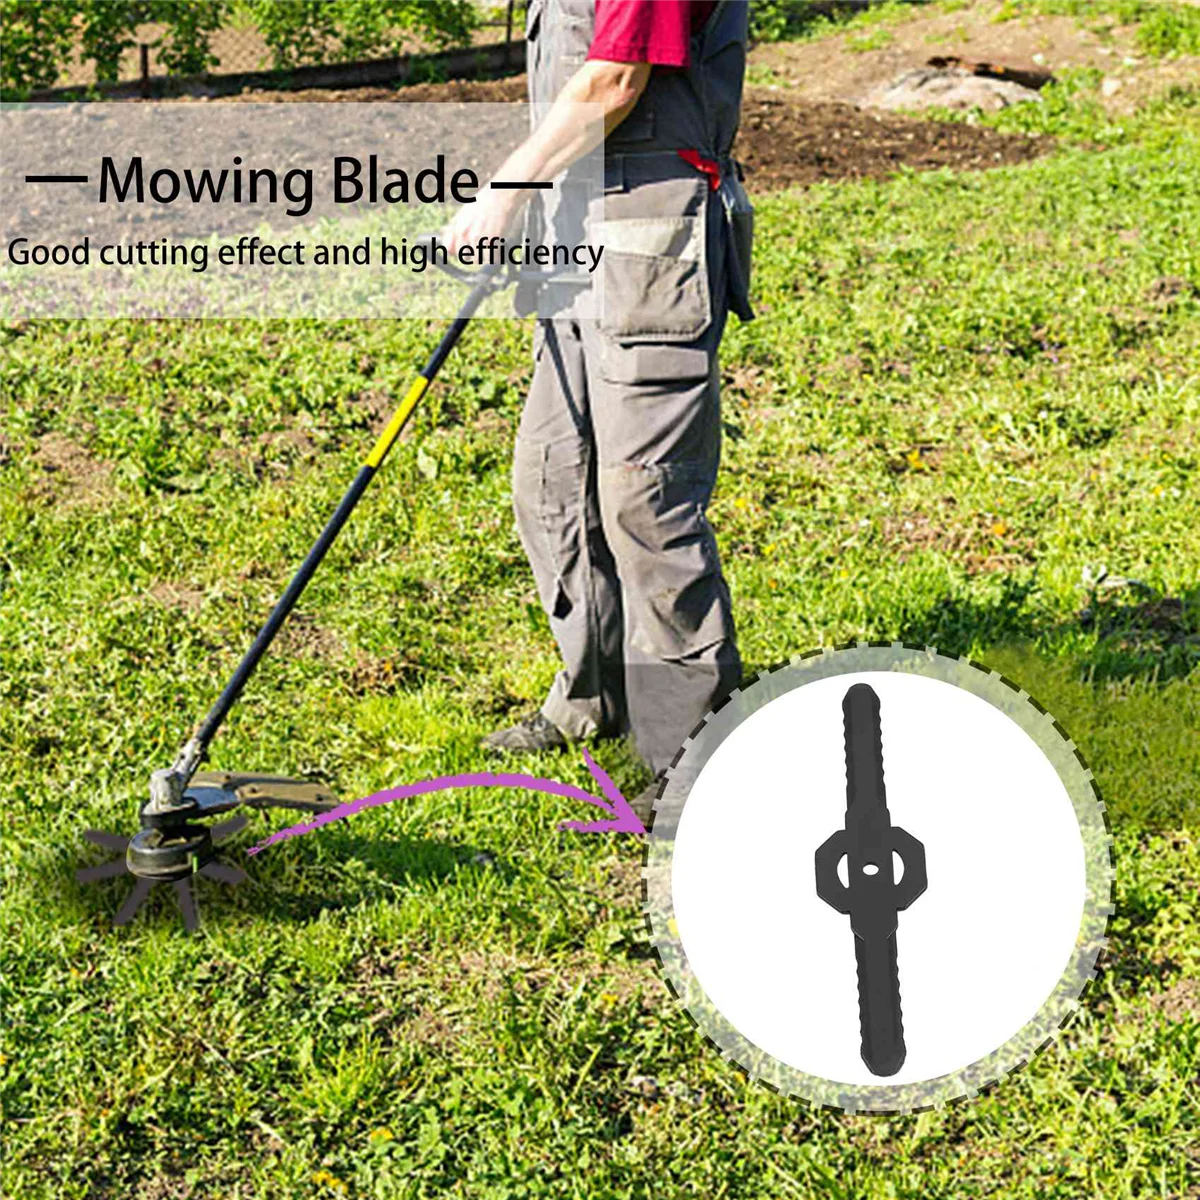 

20Pcs Plastic Grass Trimmer Blades Lawn Mower Blade Cordless Trimmer Garden Tool Lawn Mower Trimmer Accessories